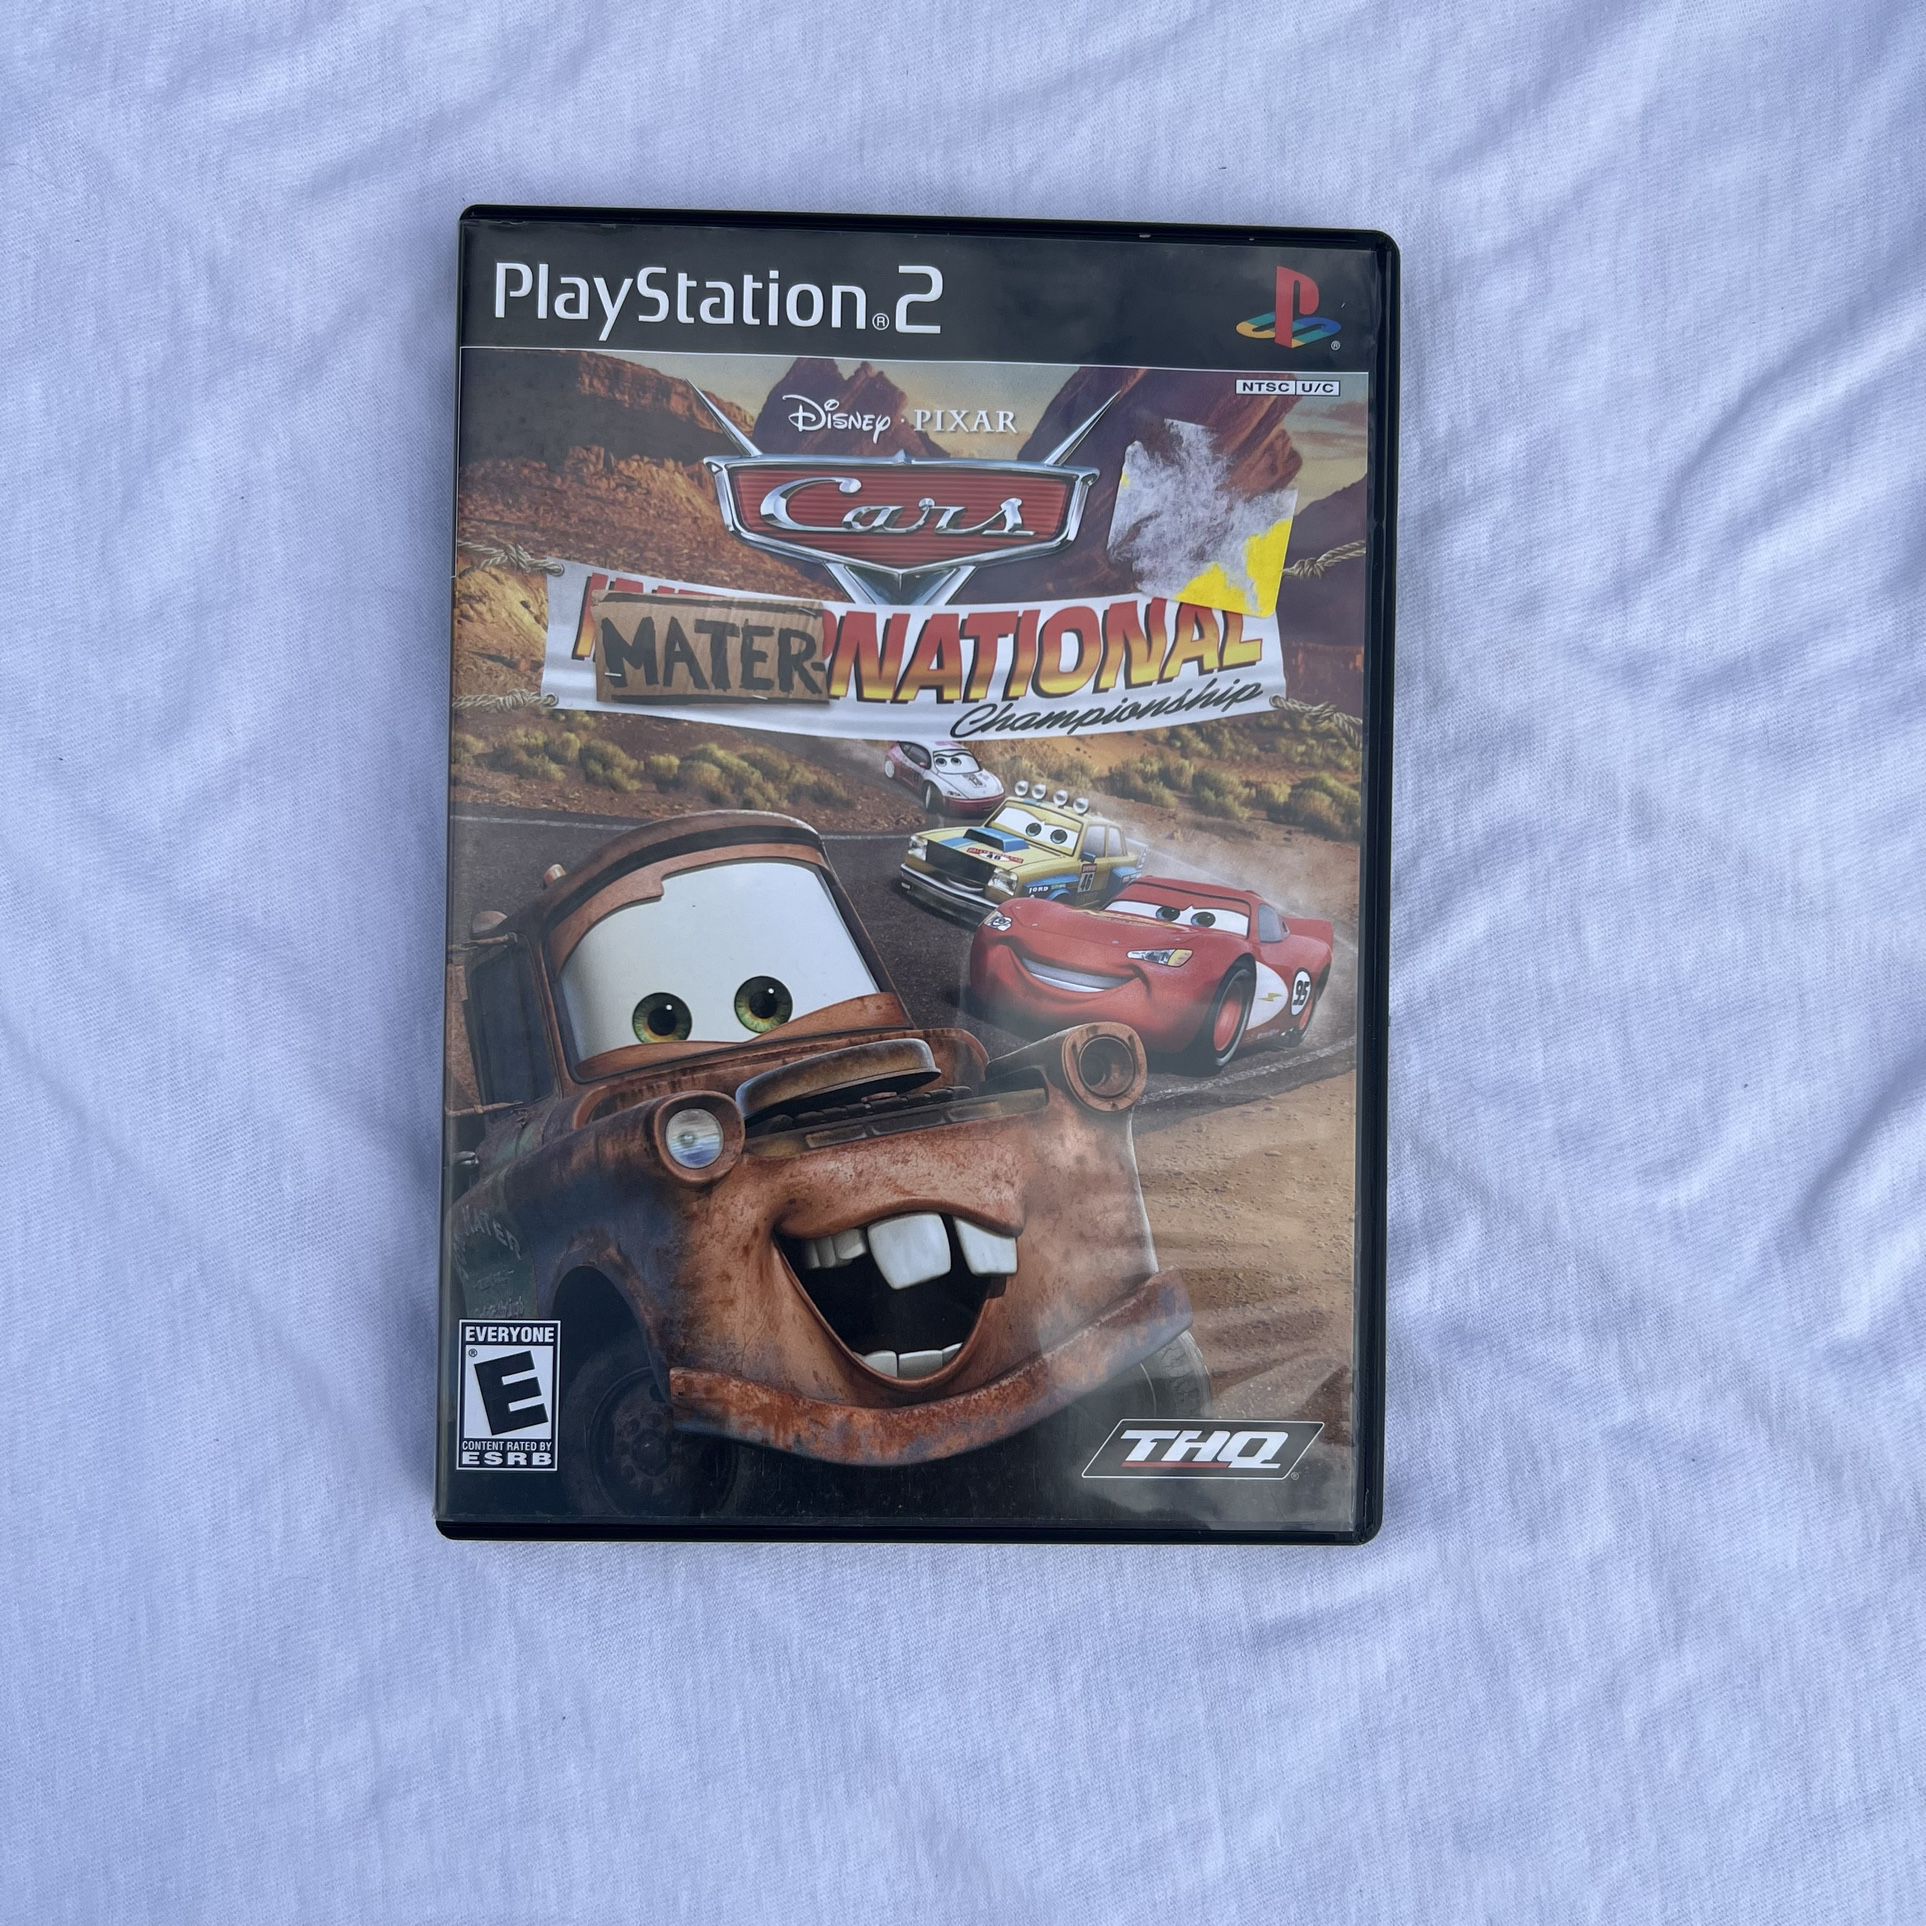  Disney PIXAR Cars: Mater-National Championship (PlayStation 2, 2007) PS2 Game